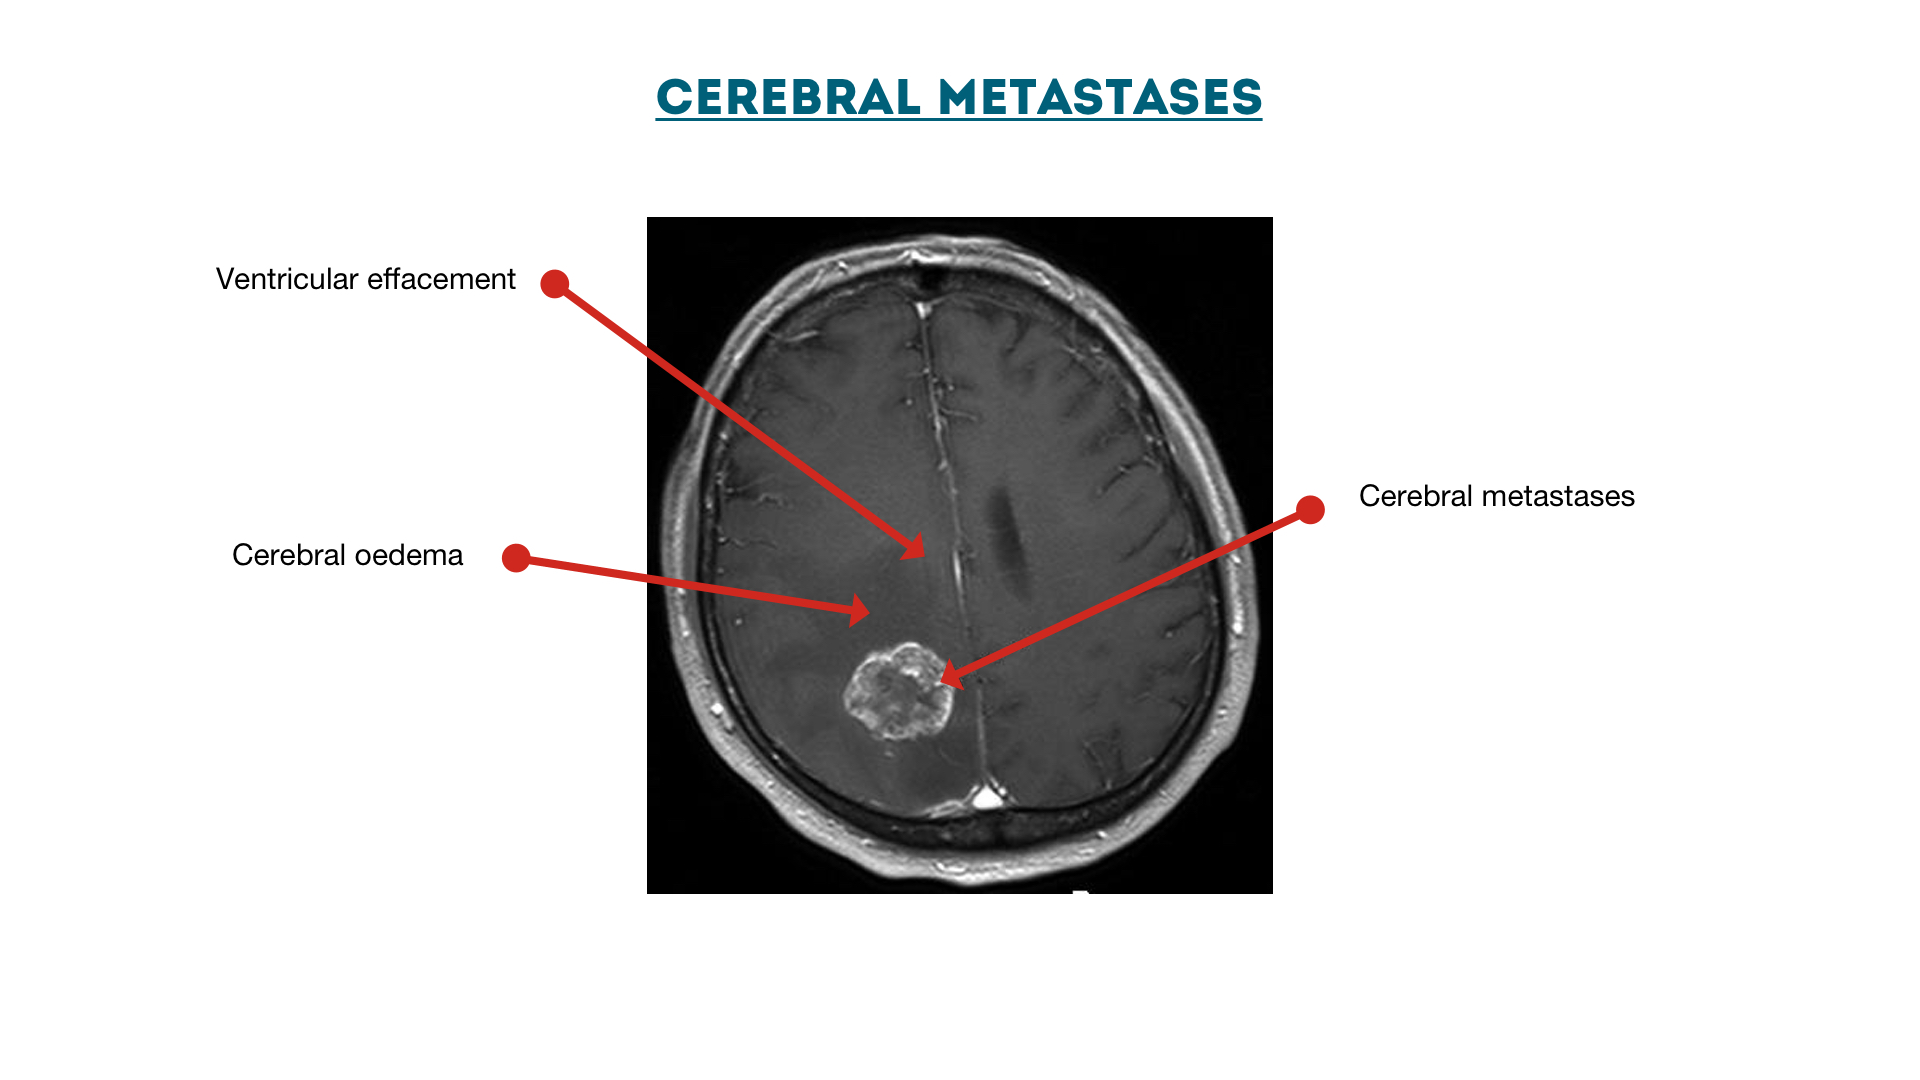 Figure 12 : Cerebral metastases with oedema